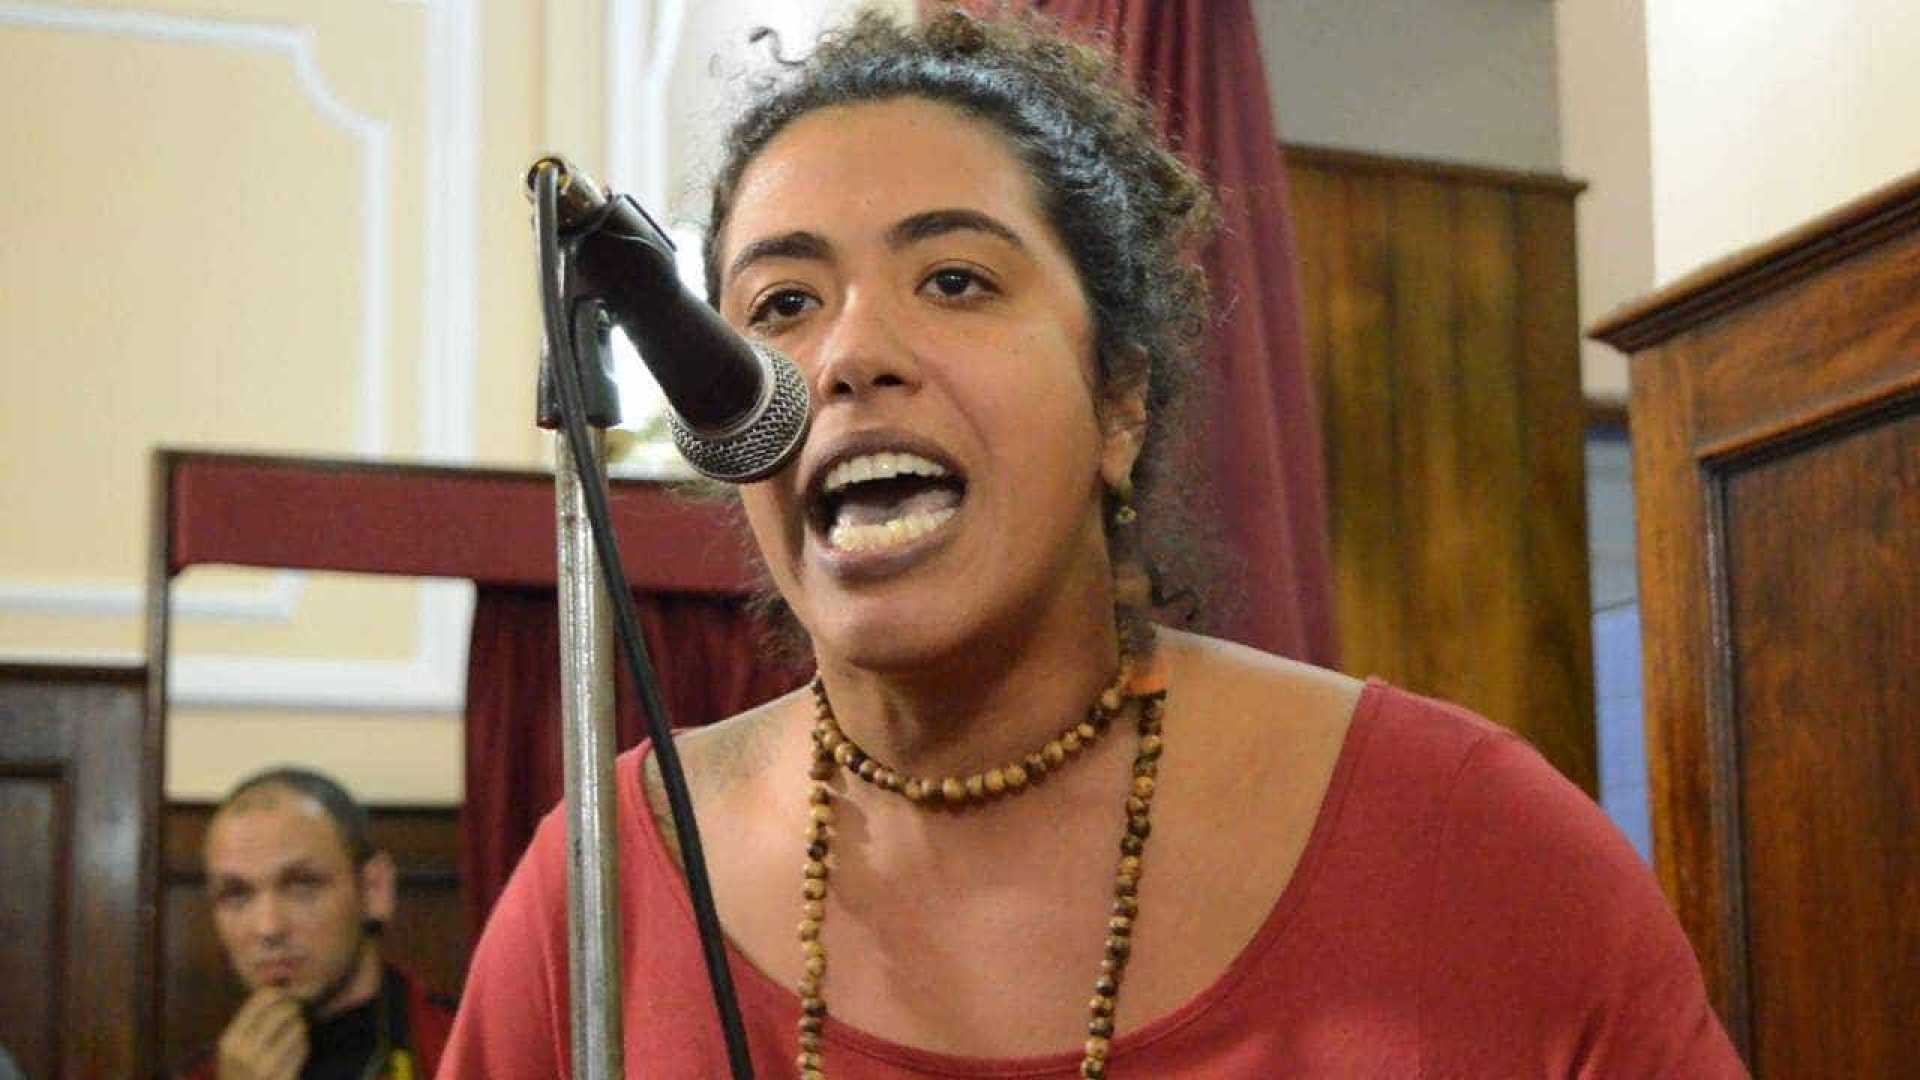 Vereadora do PSOL que era amiga de Marielle recebeu ameaças de morte